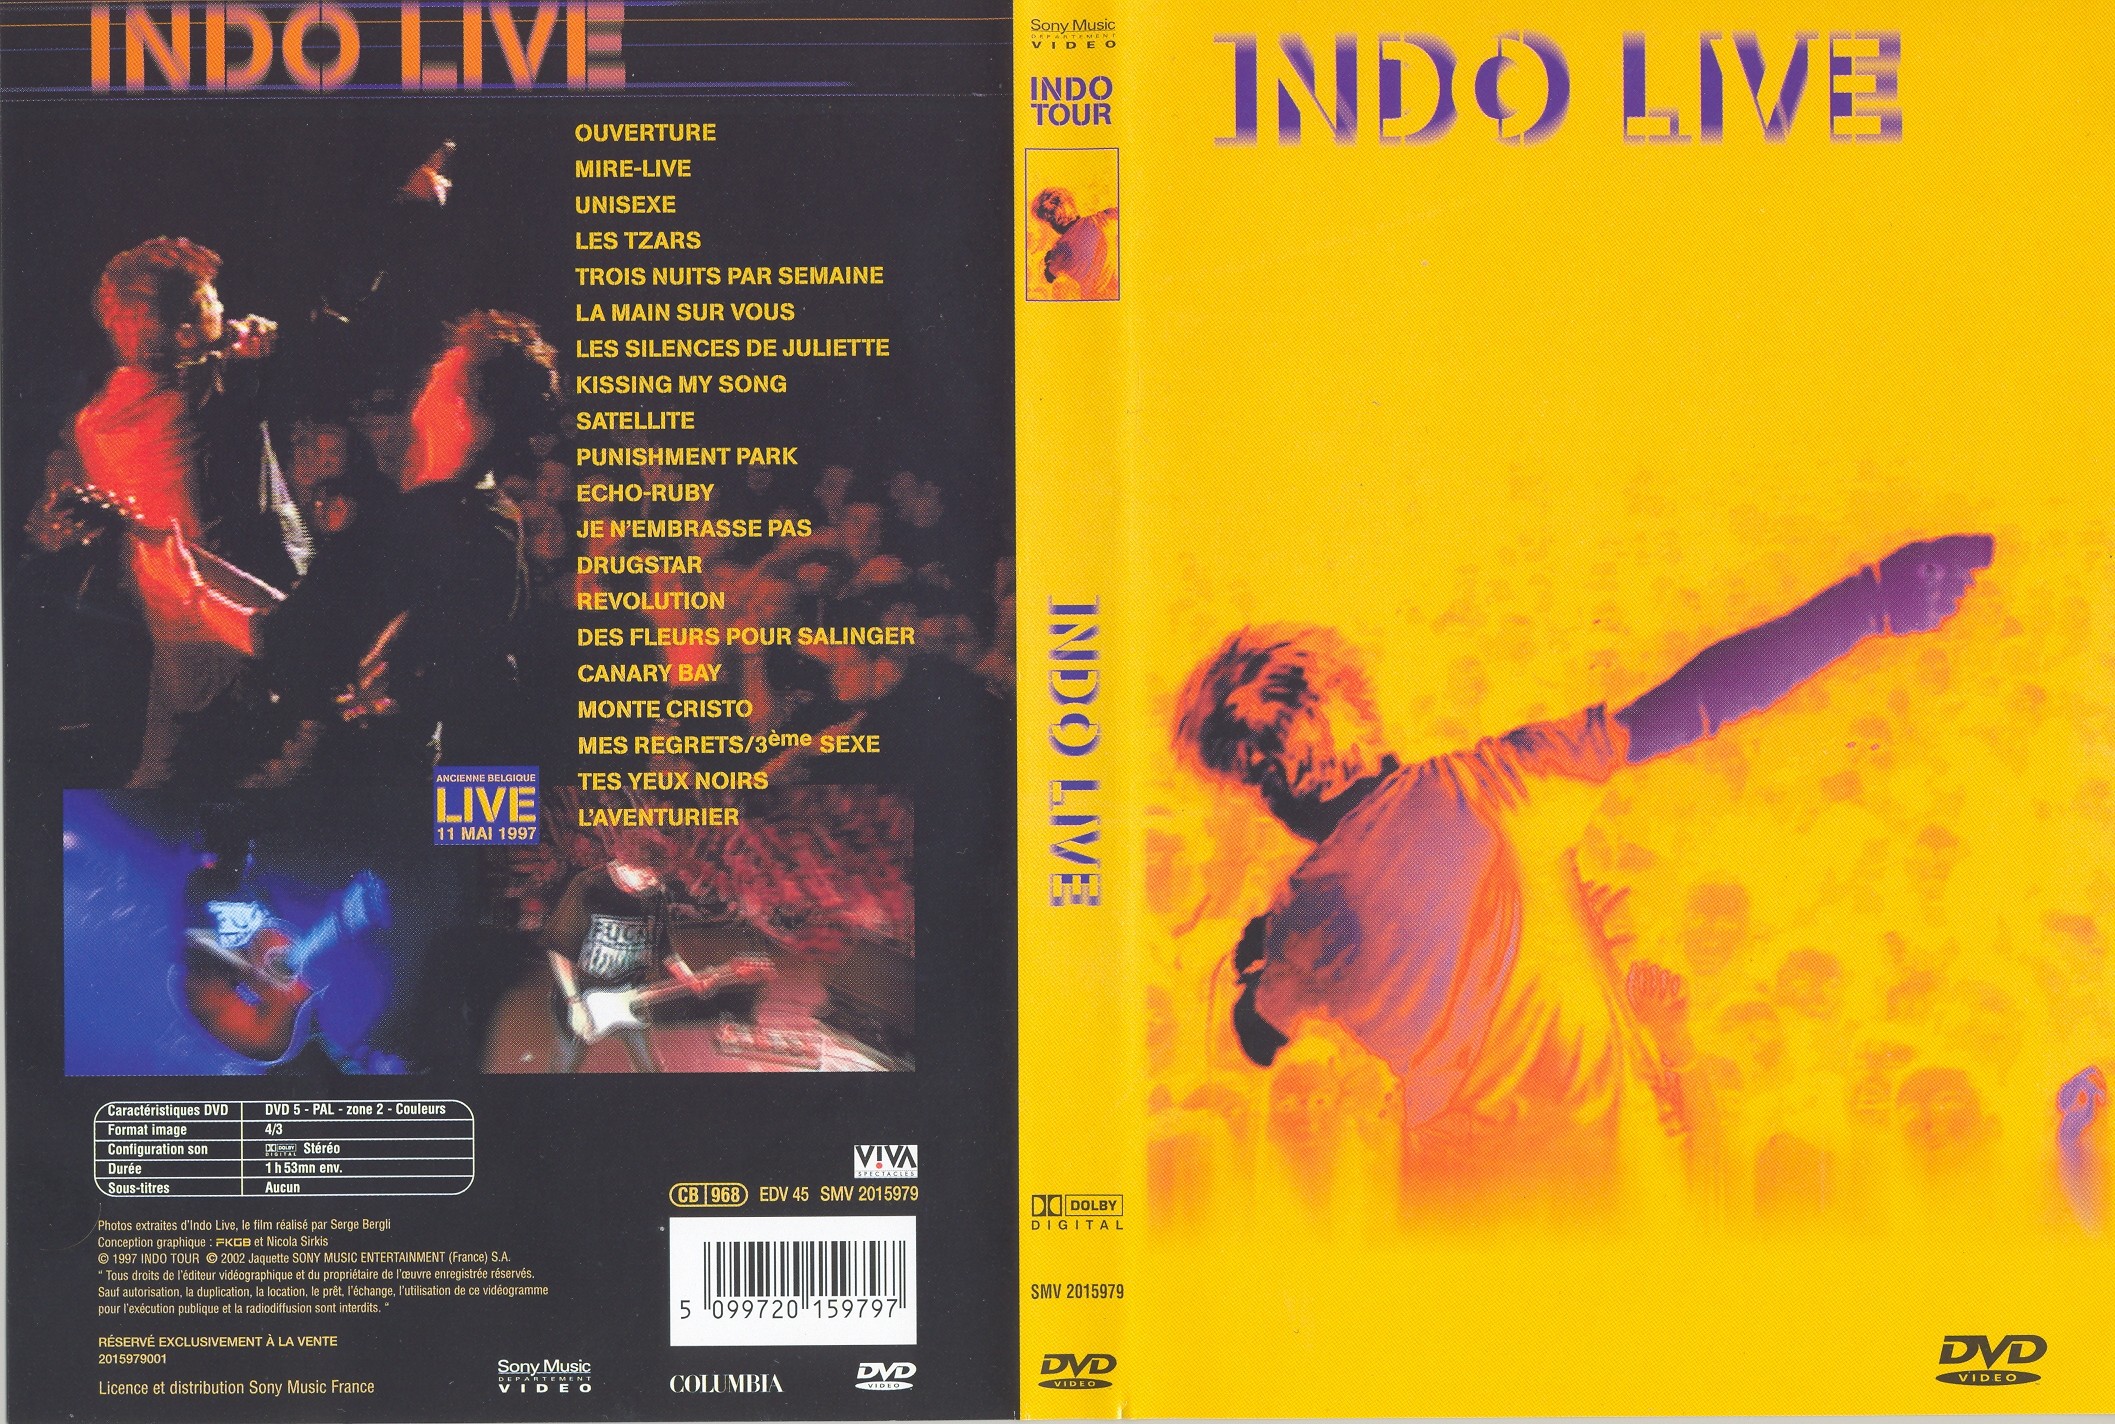 Jaquette DVD Indo live